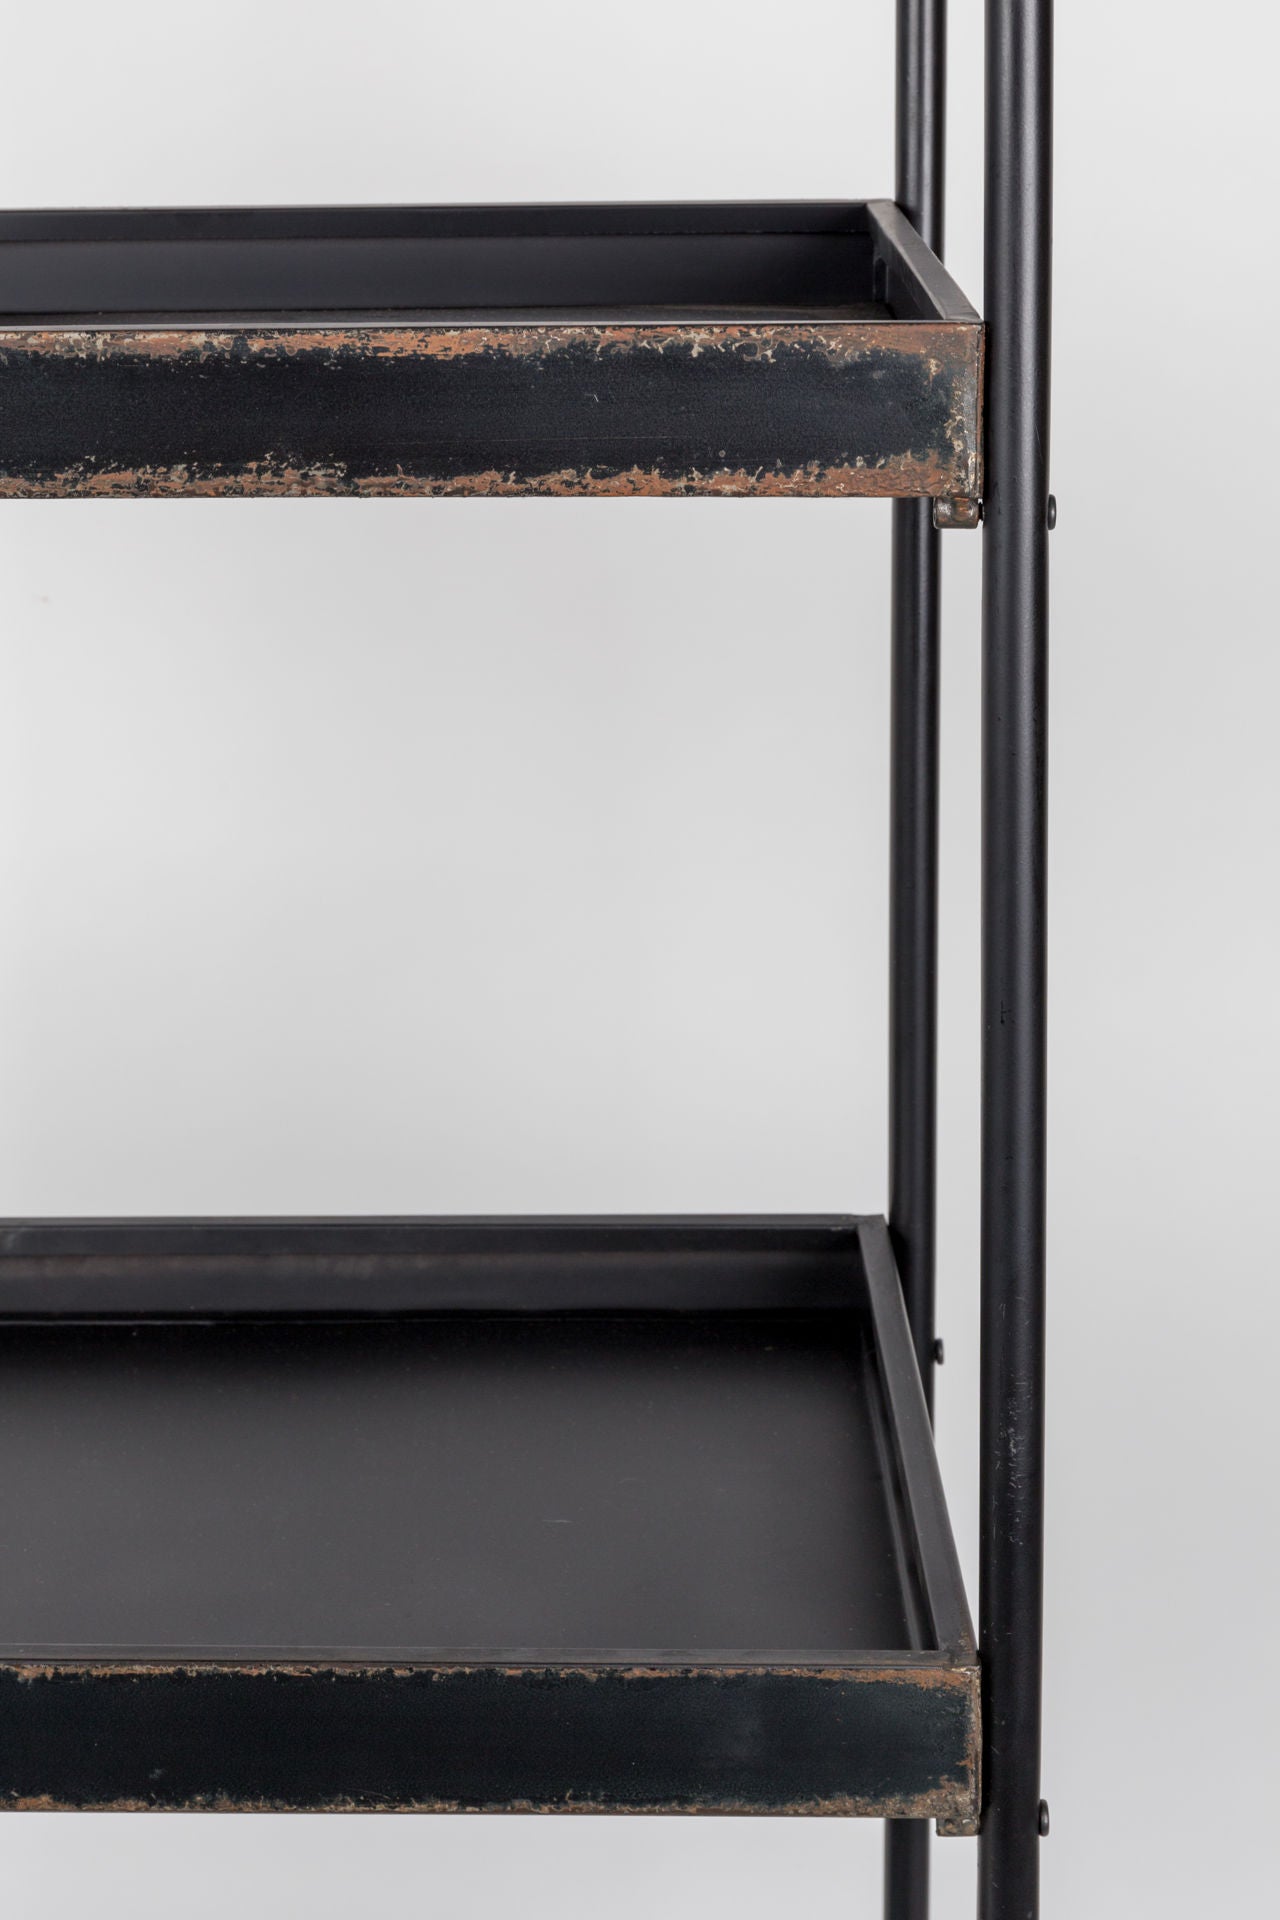 Nancy's Roma Plank - Industrieel - Zwart, Bruin - IJzer, Hout, Kunststof - 33 cm x 48,5 cm x 11 cm